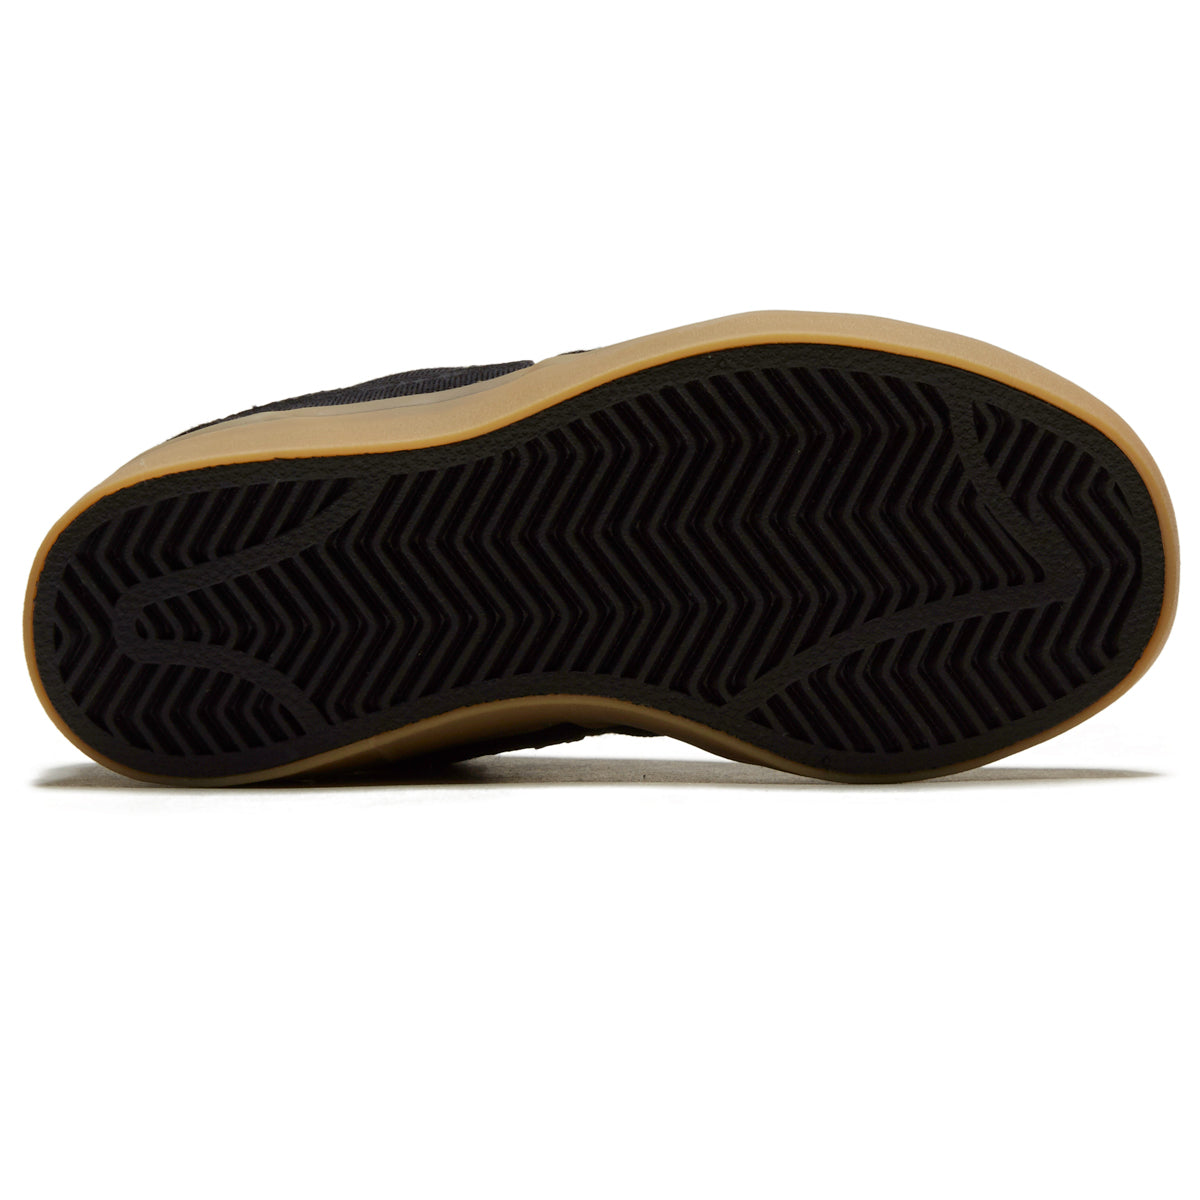 Nike SB Youth Check Canvas Shoes - Black/Black/Gum Light Brown image 4